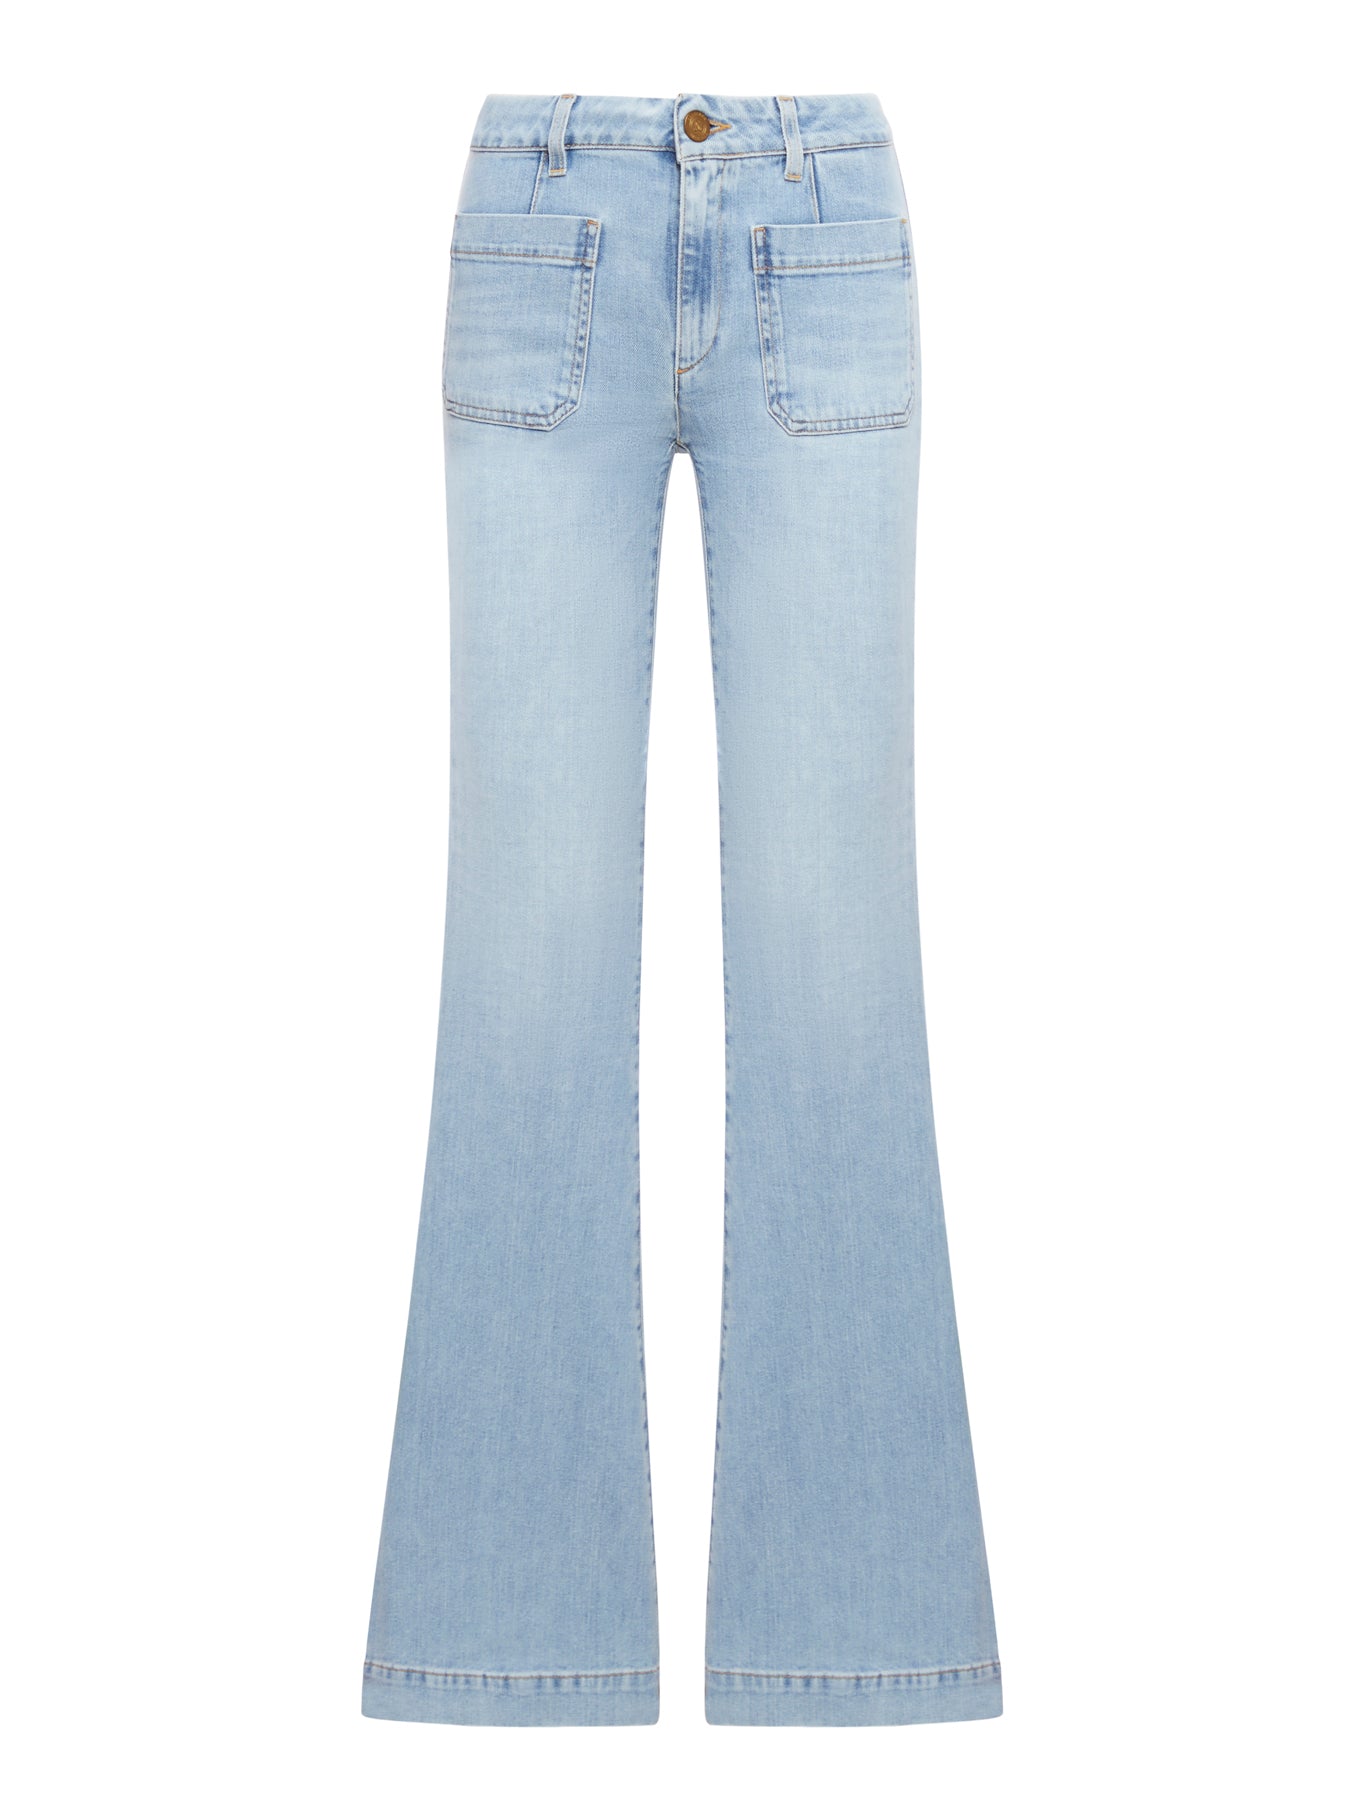 DELPHINE jeans